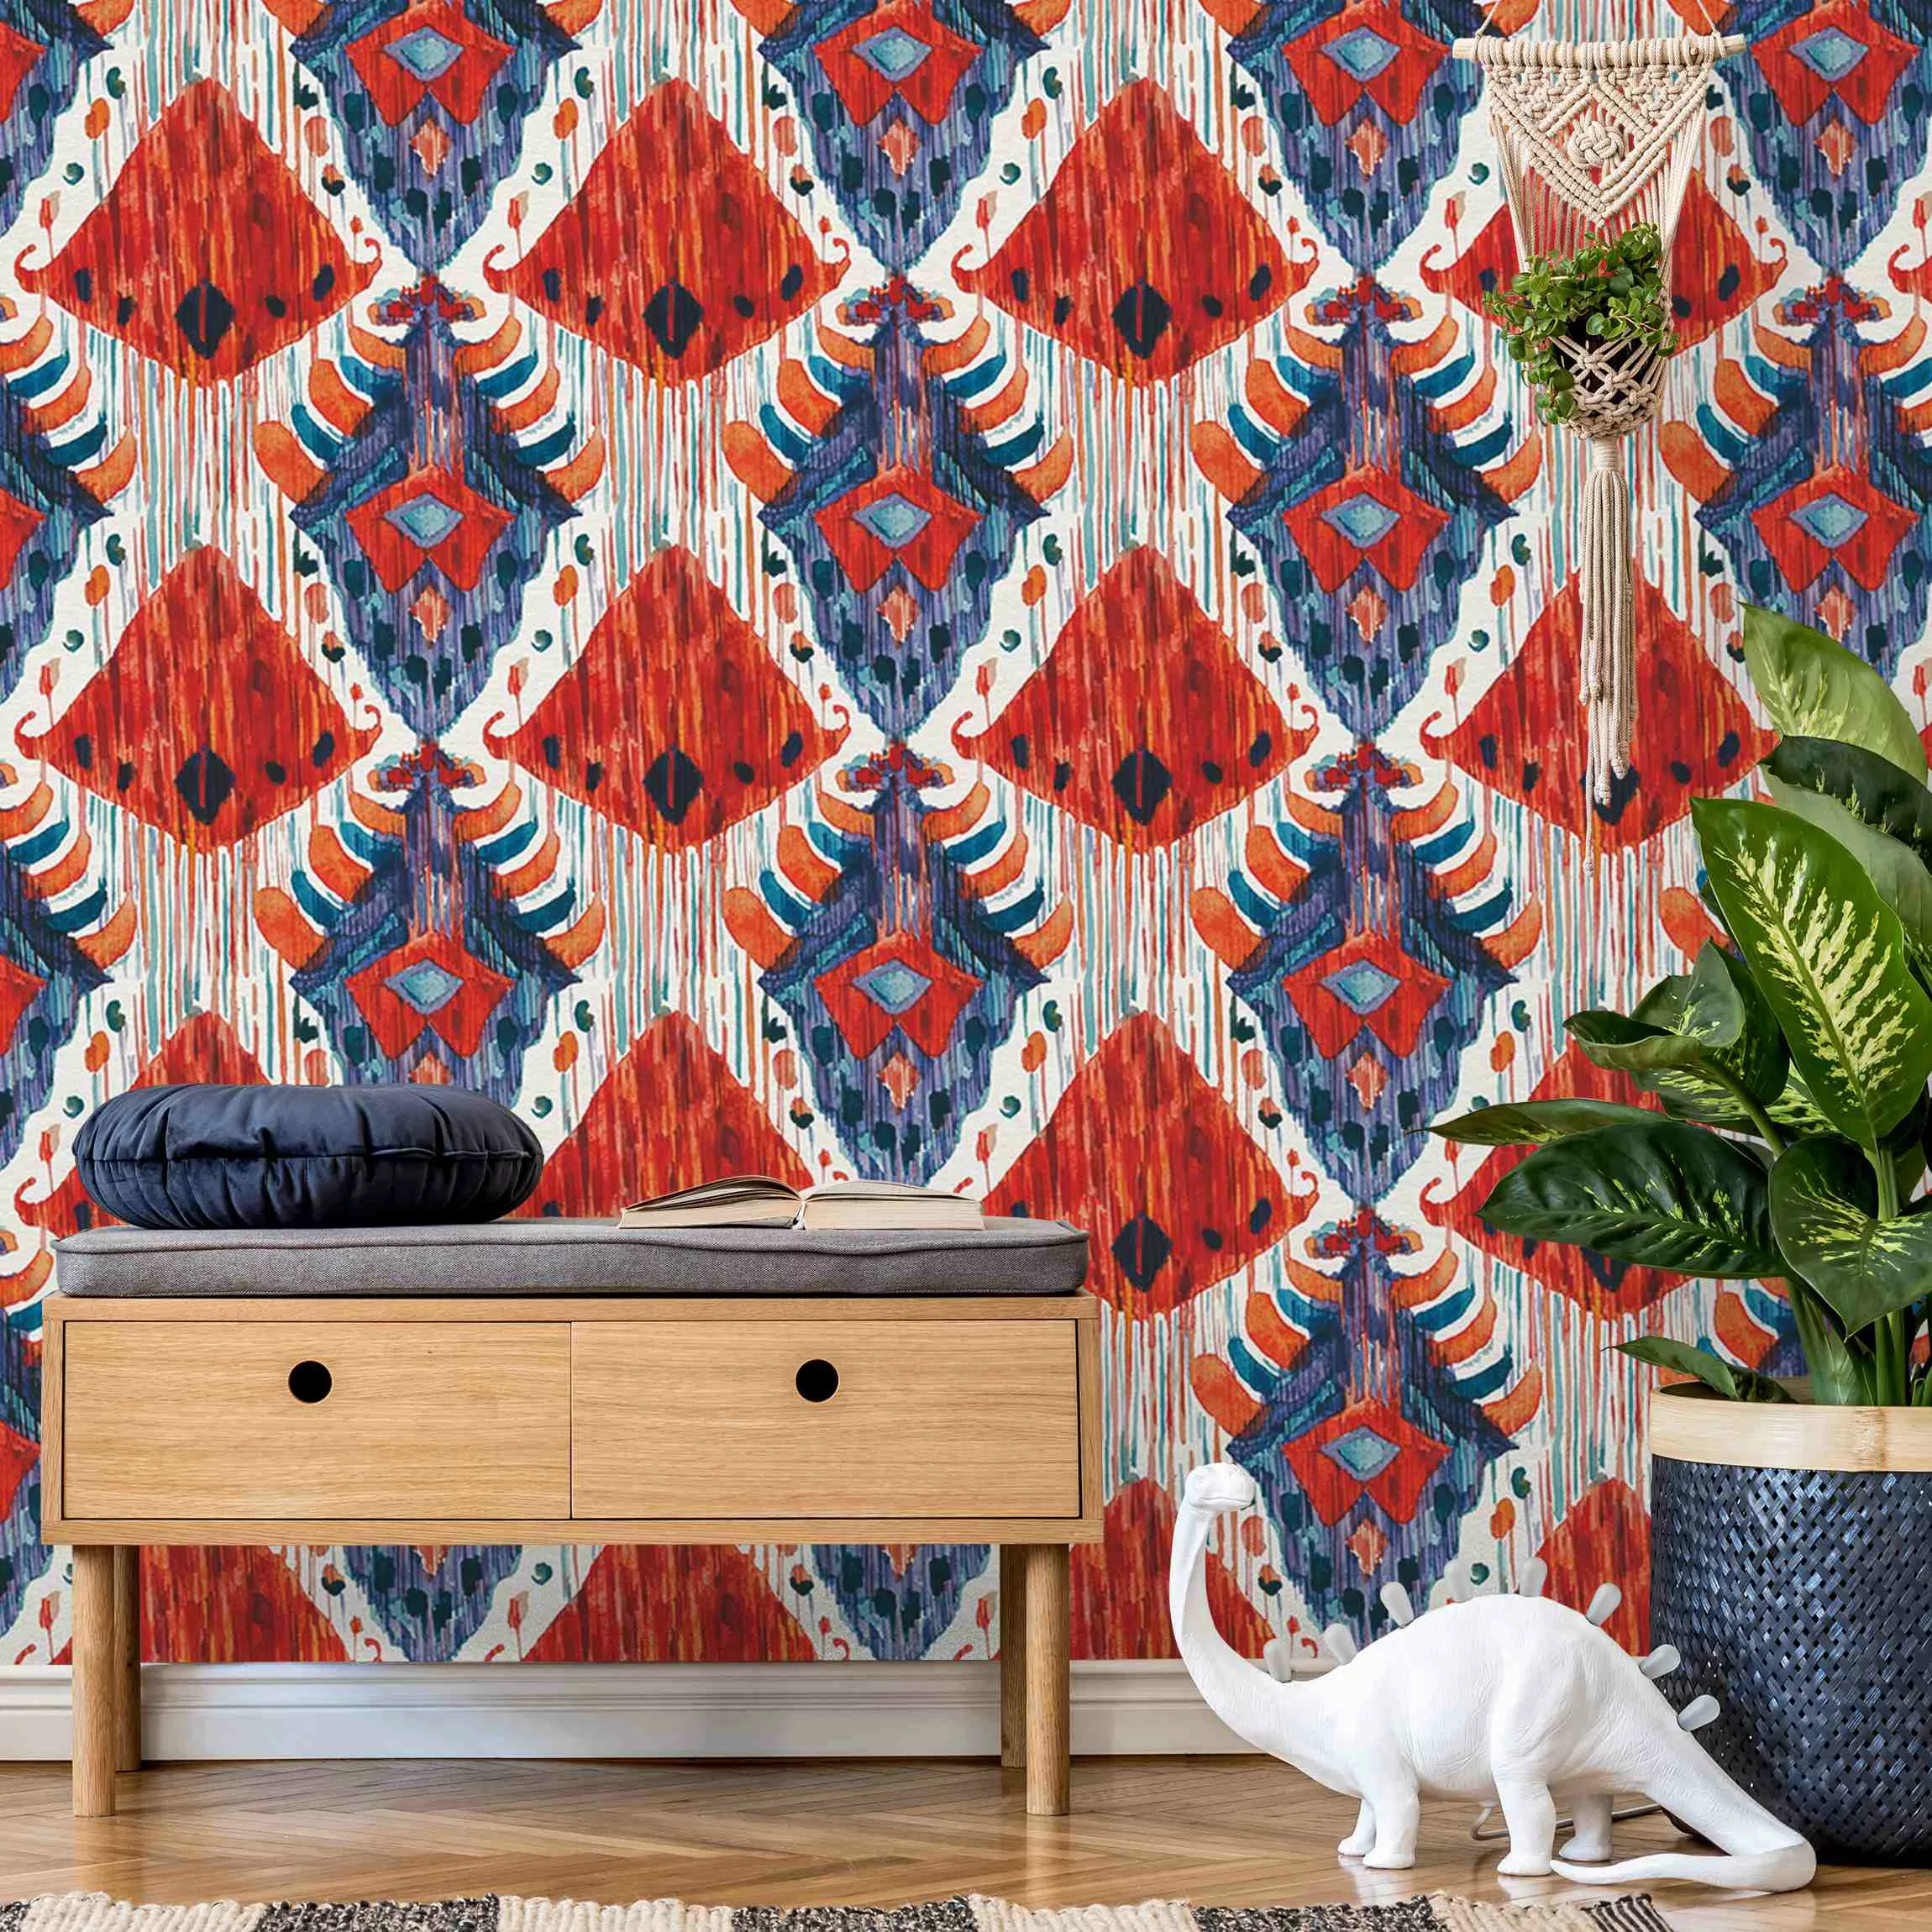 Fototapete Großes Ikat Muster Bali rot und blau günstig online kaufen